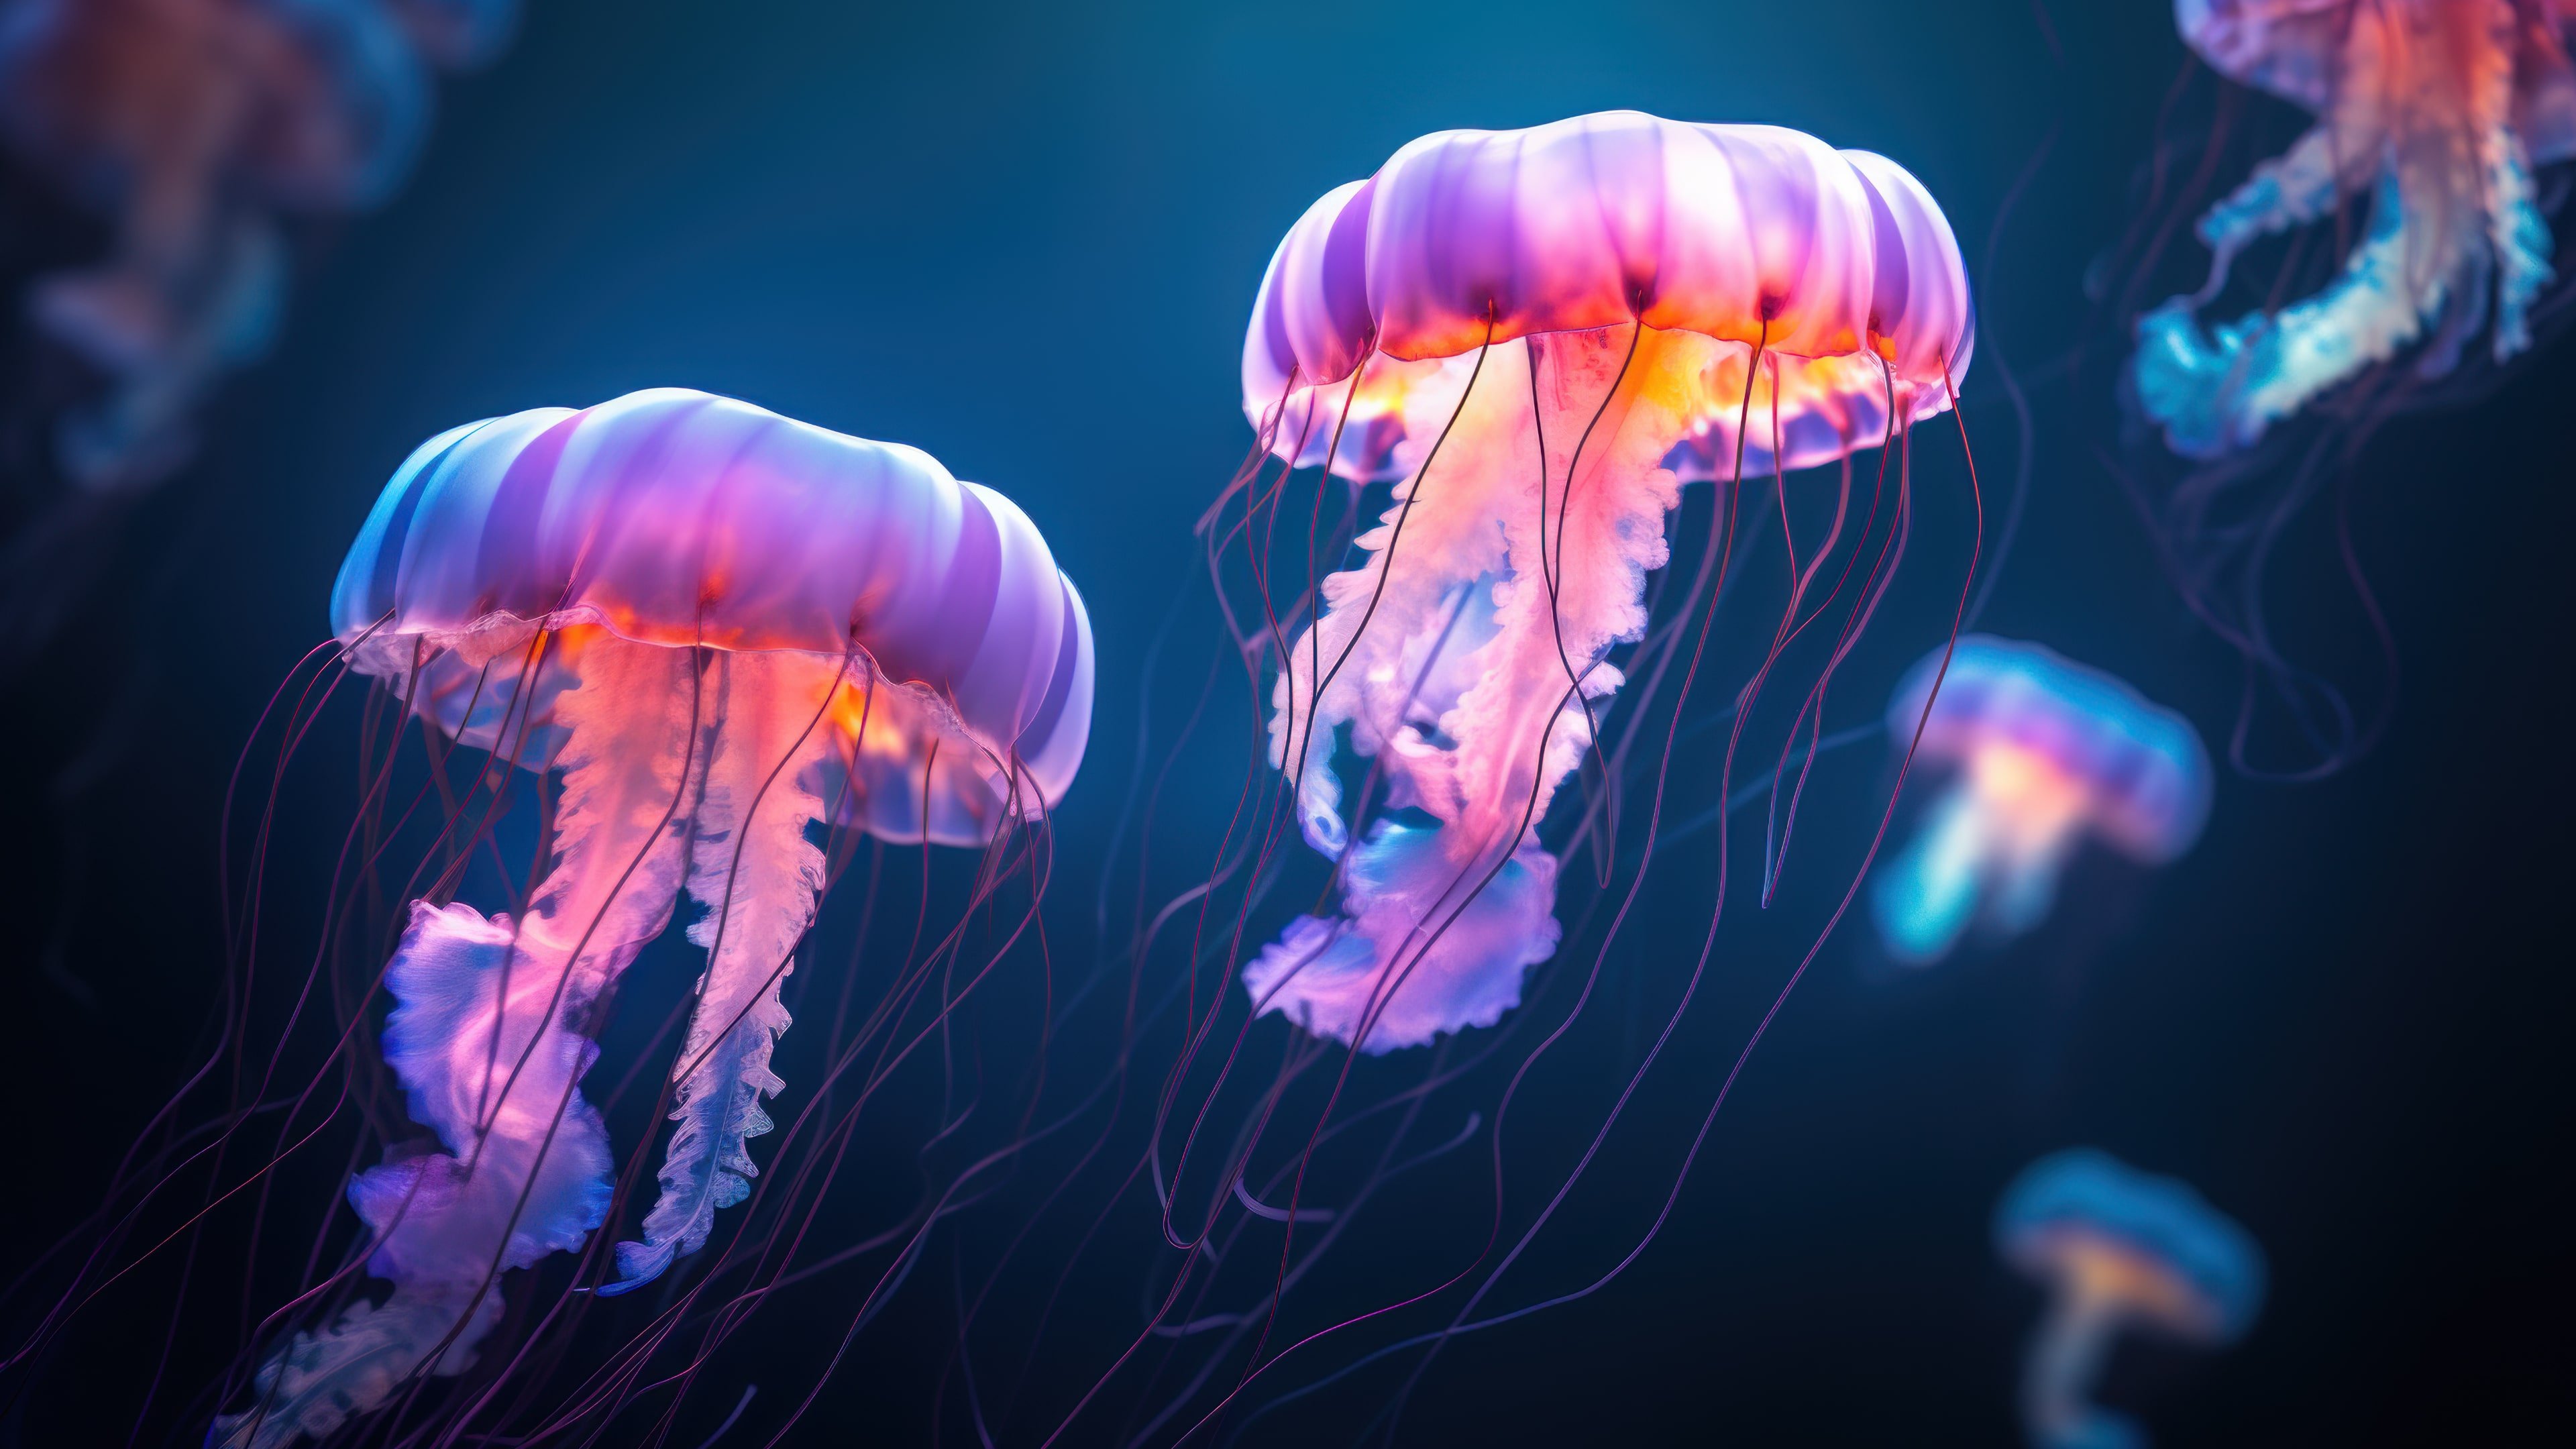 Orange Jellyfish Wallpaper · Free Stock Photo